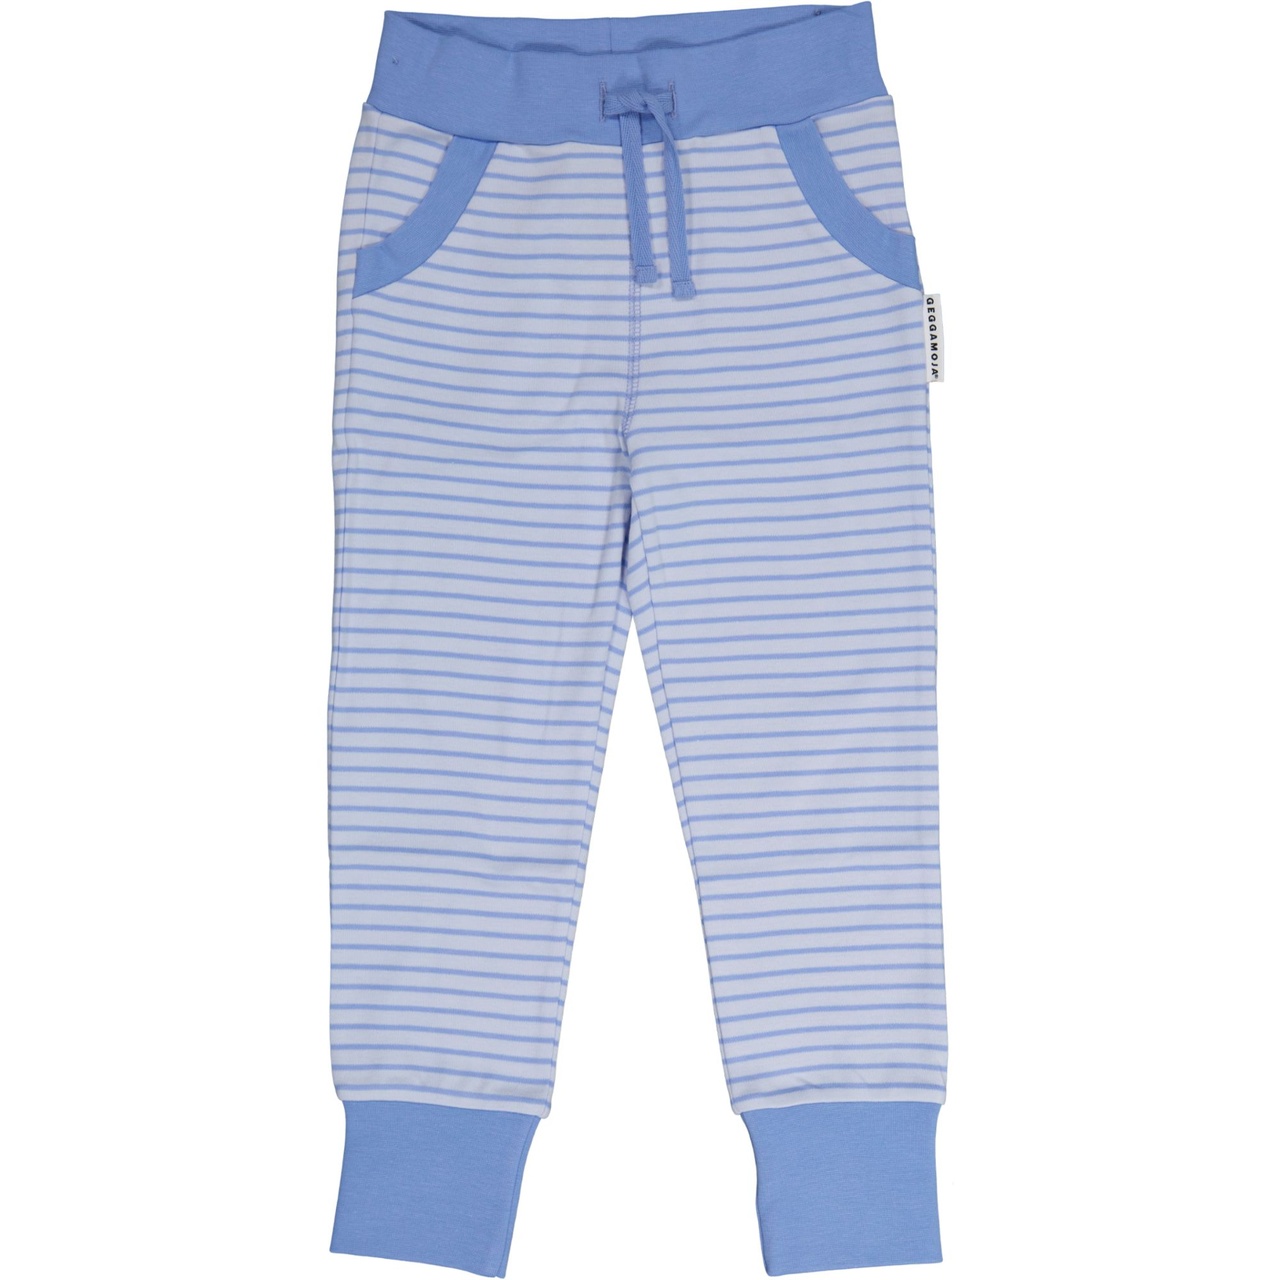 Long pants Light blue/blue  110/116